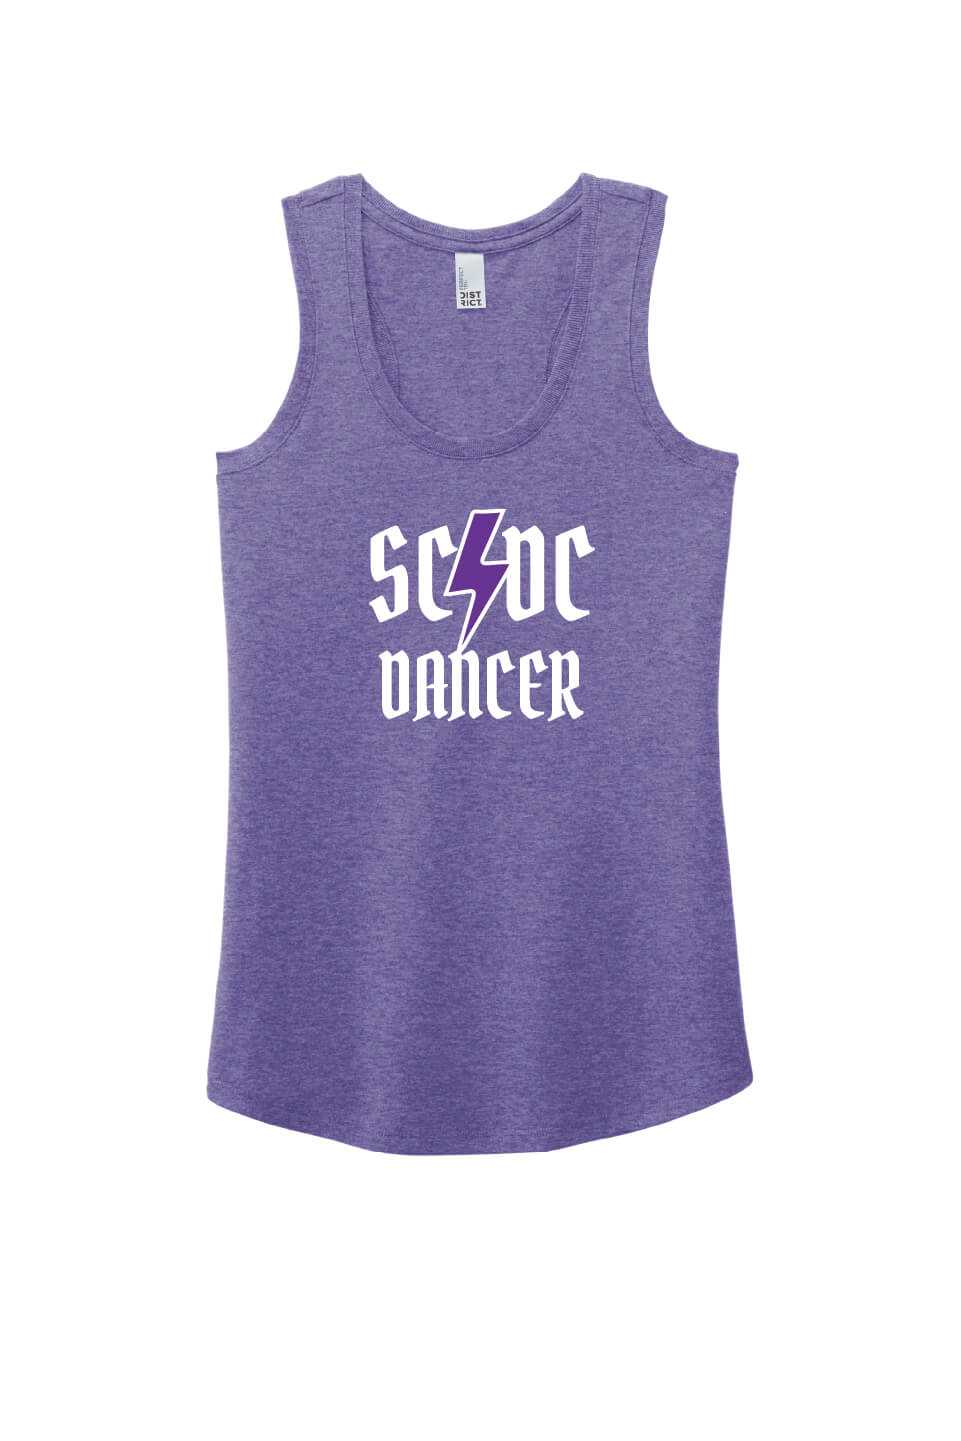 SCDC Dancer Racerback Tank purple